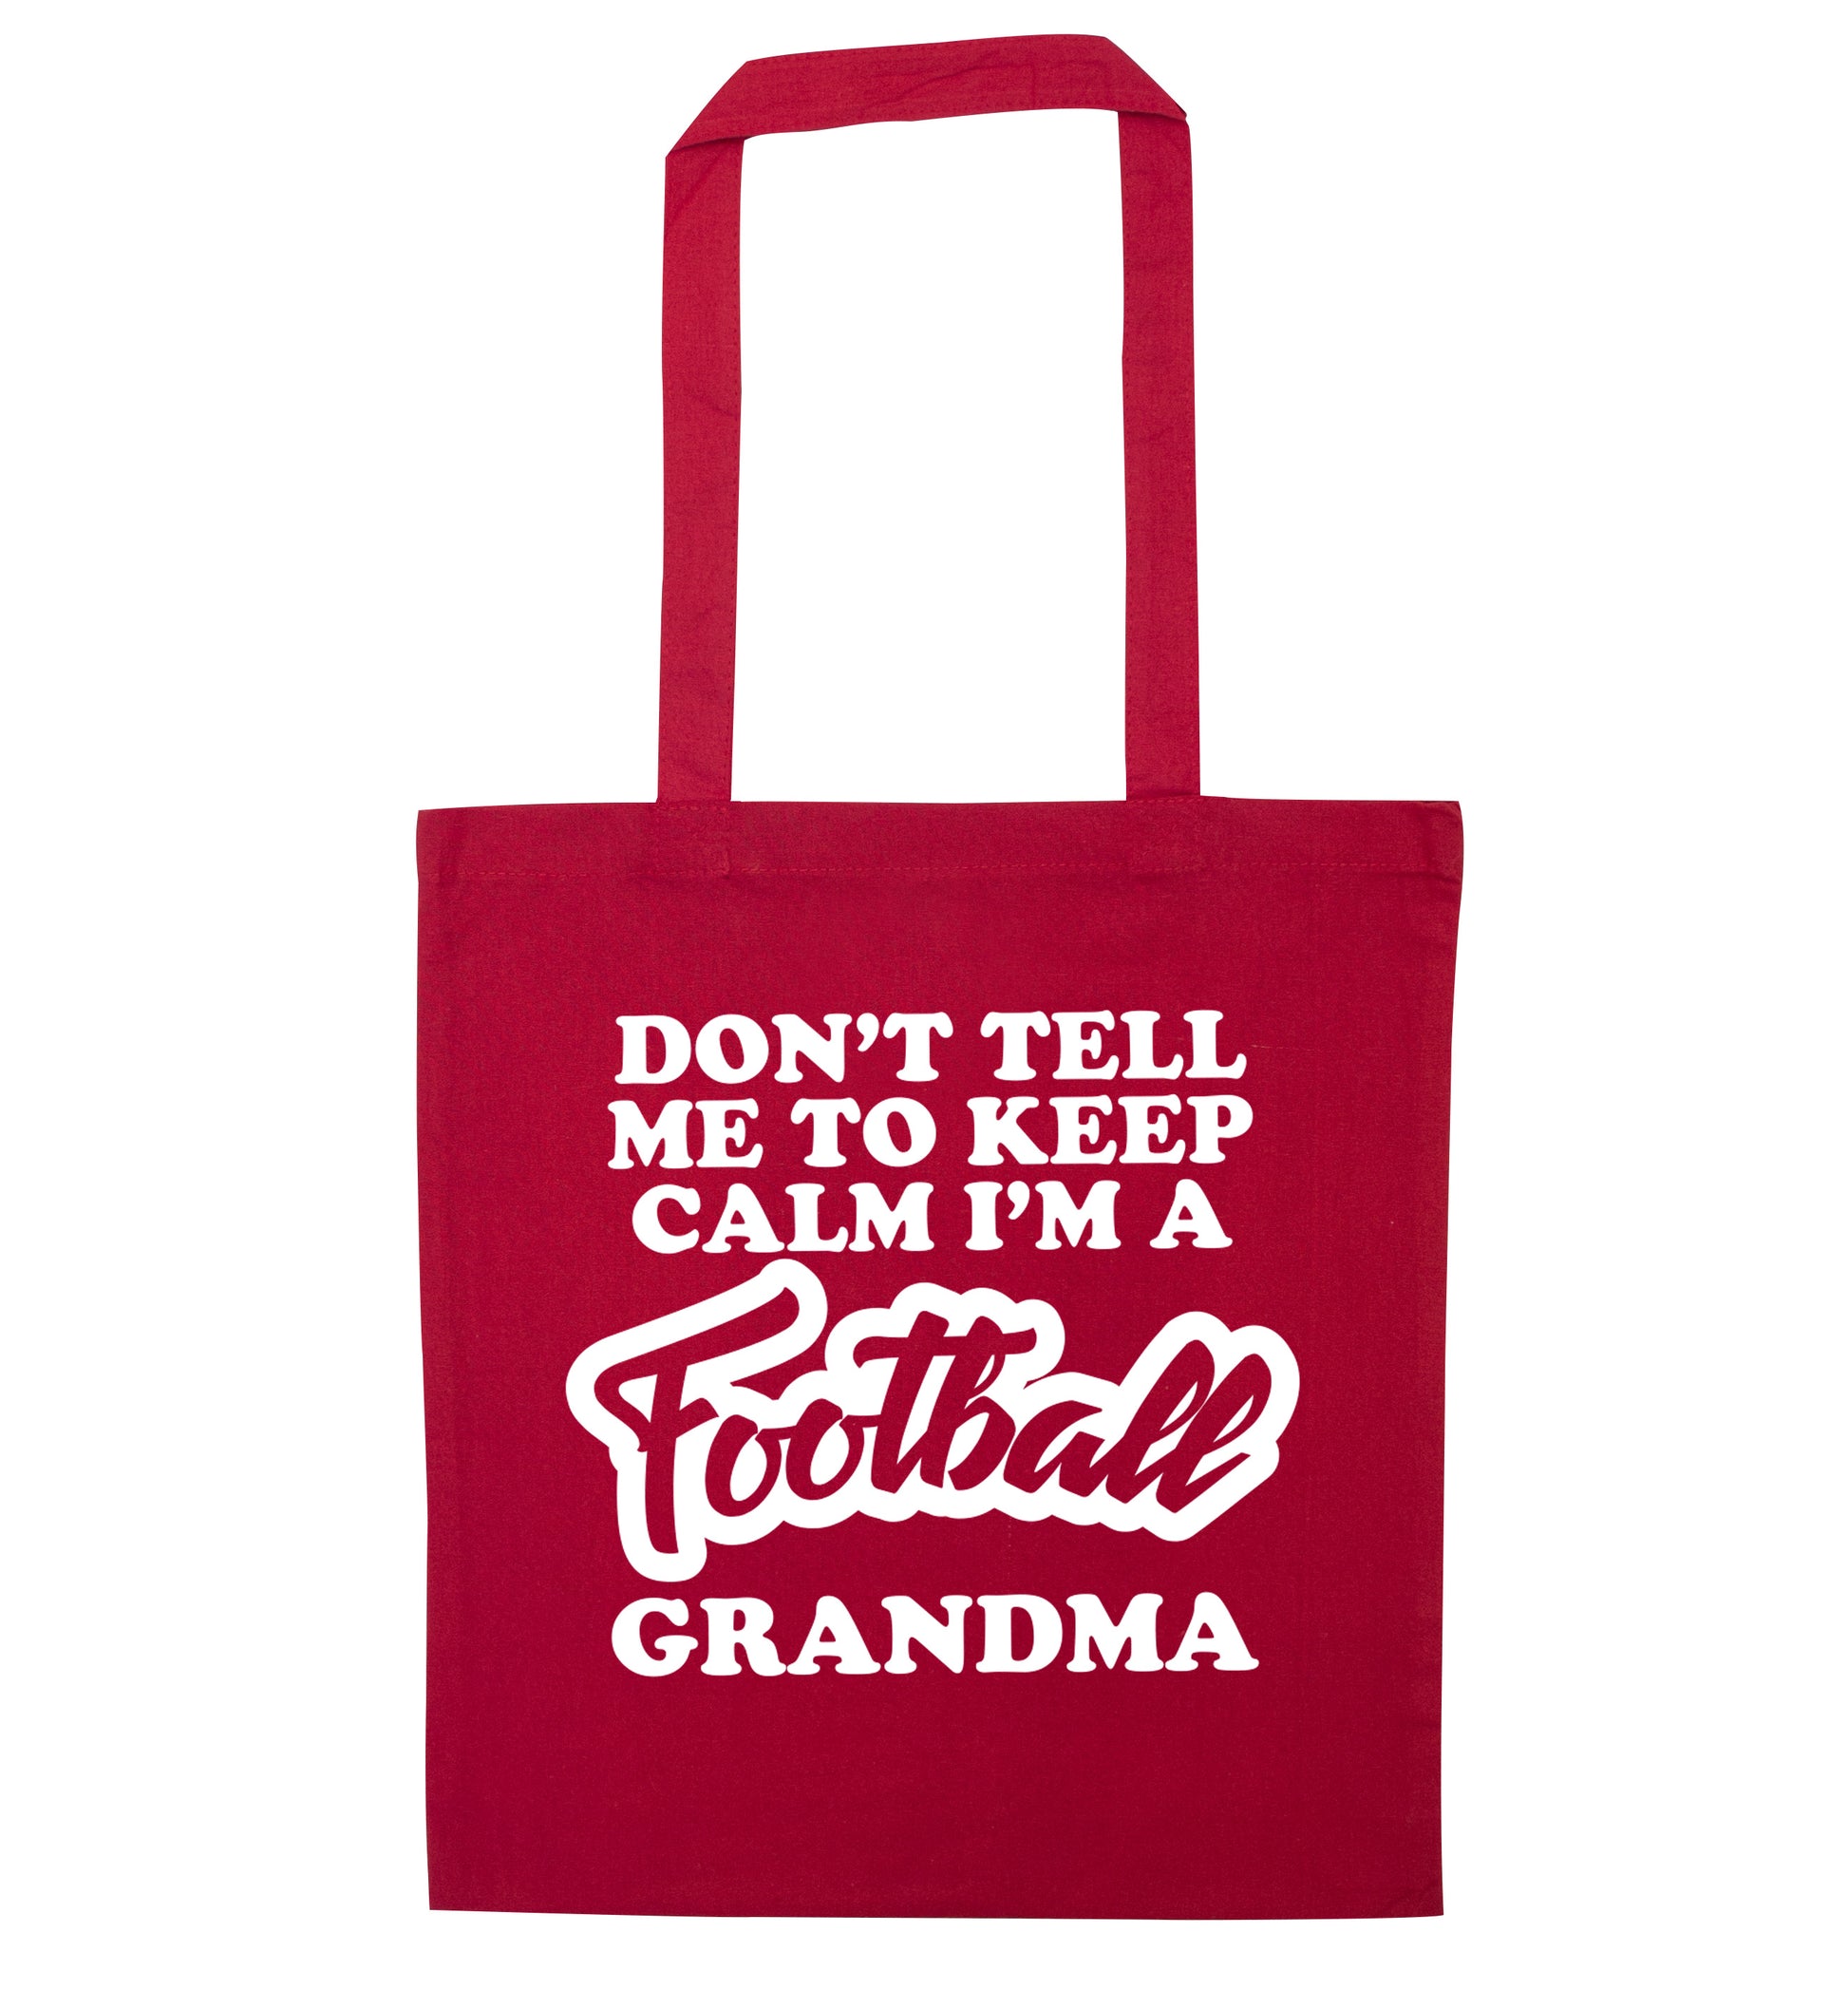 Don't tell me to keep calm I'm a football grandma red tote bag